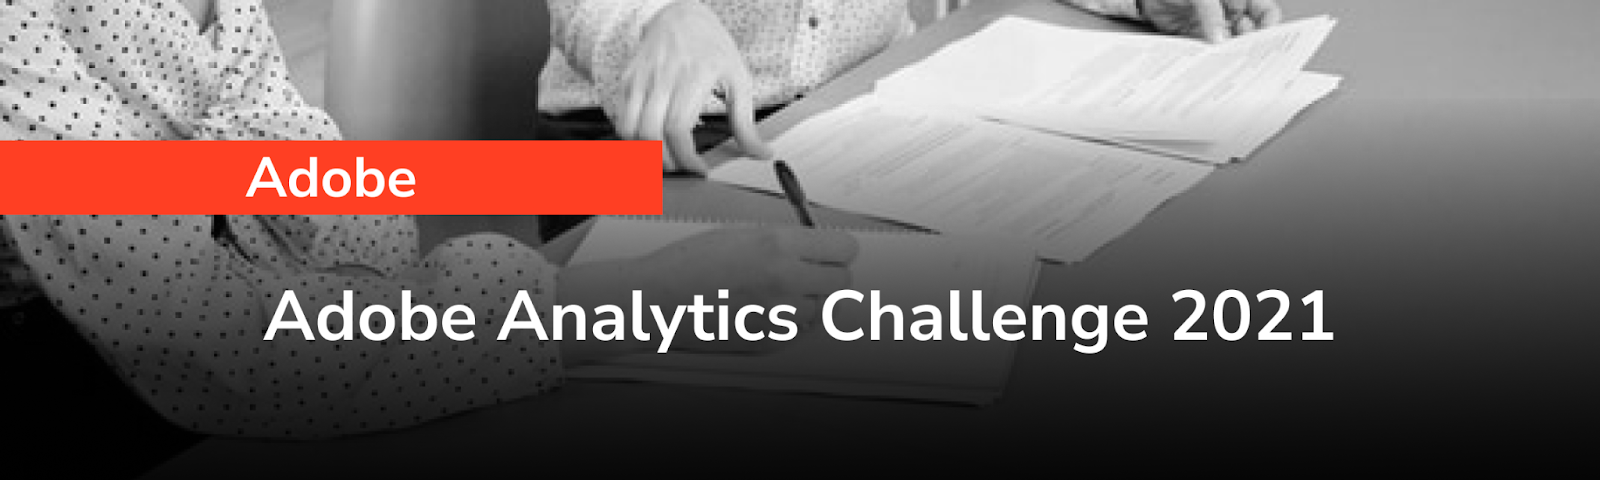 Adobe Analytics Challenge 2021